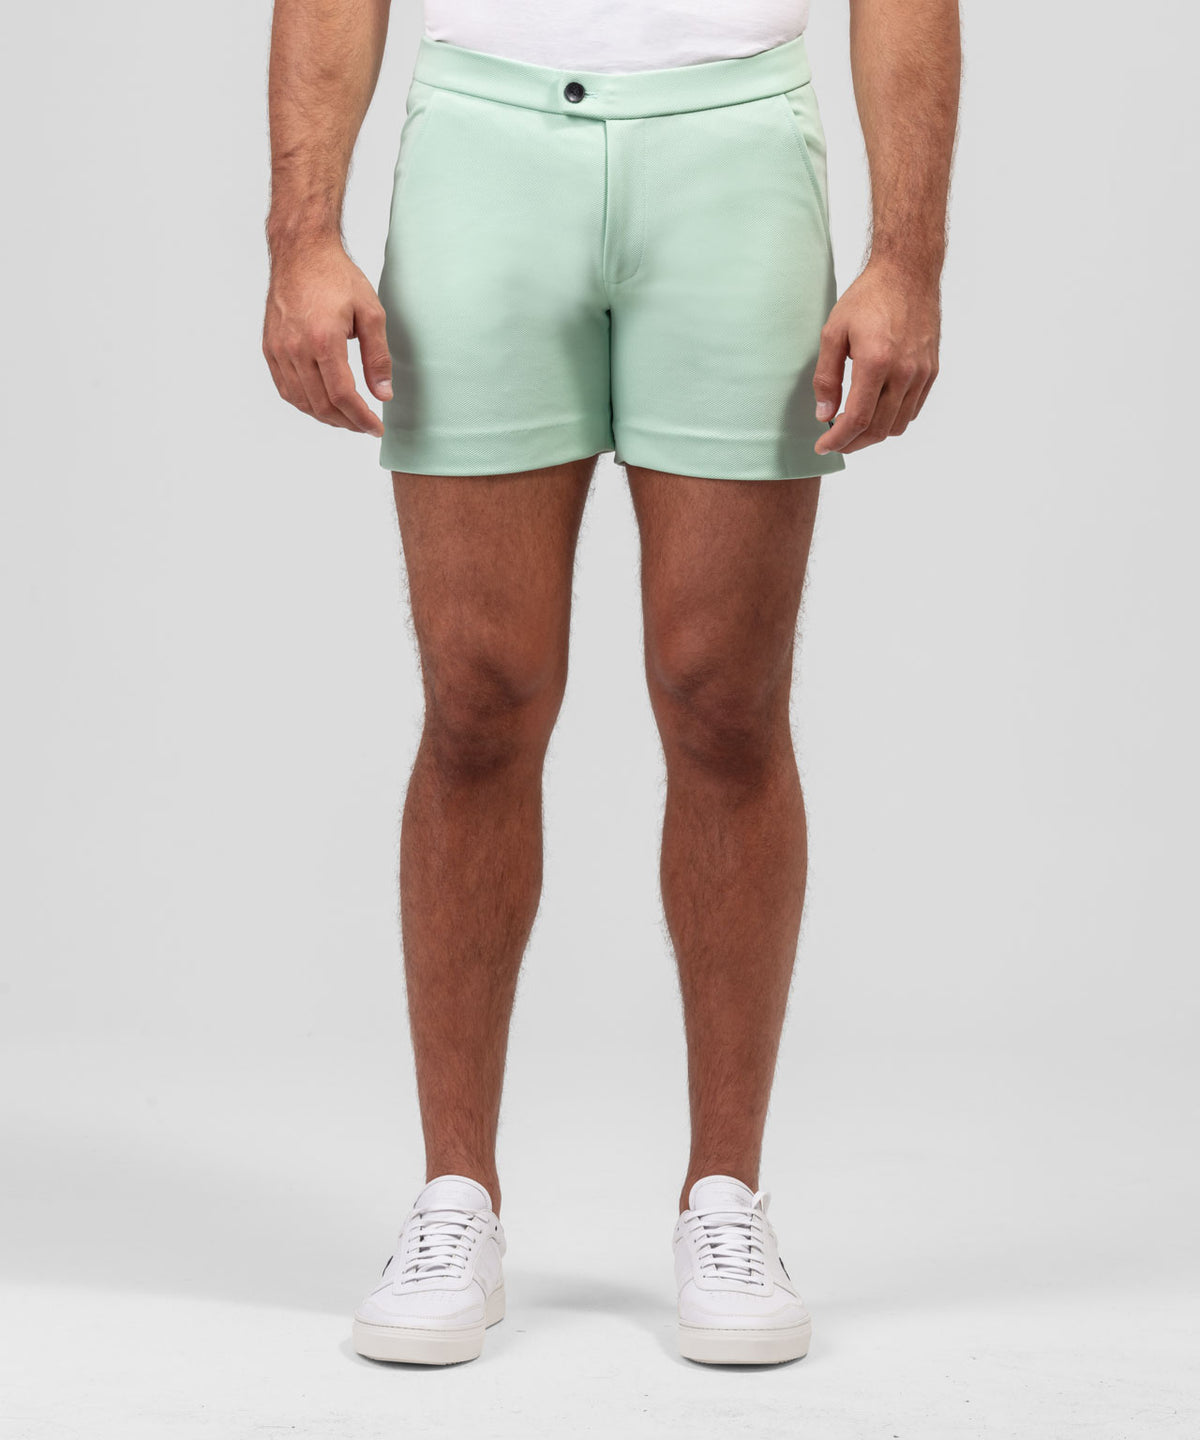 Tennis Shorts: Pistachio Green